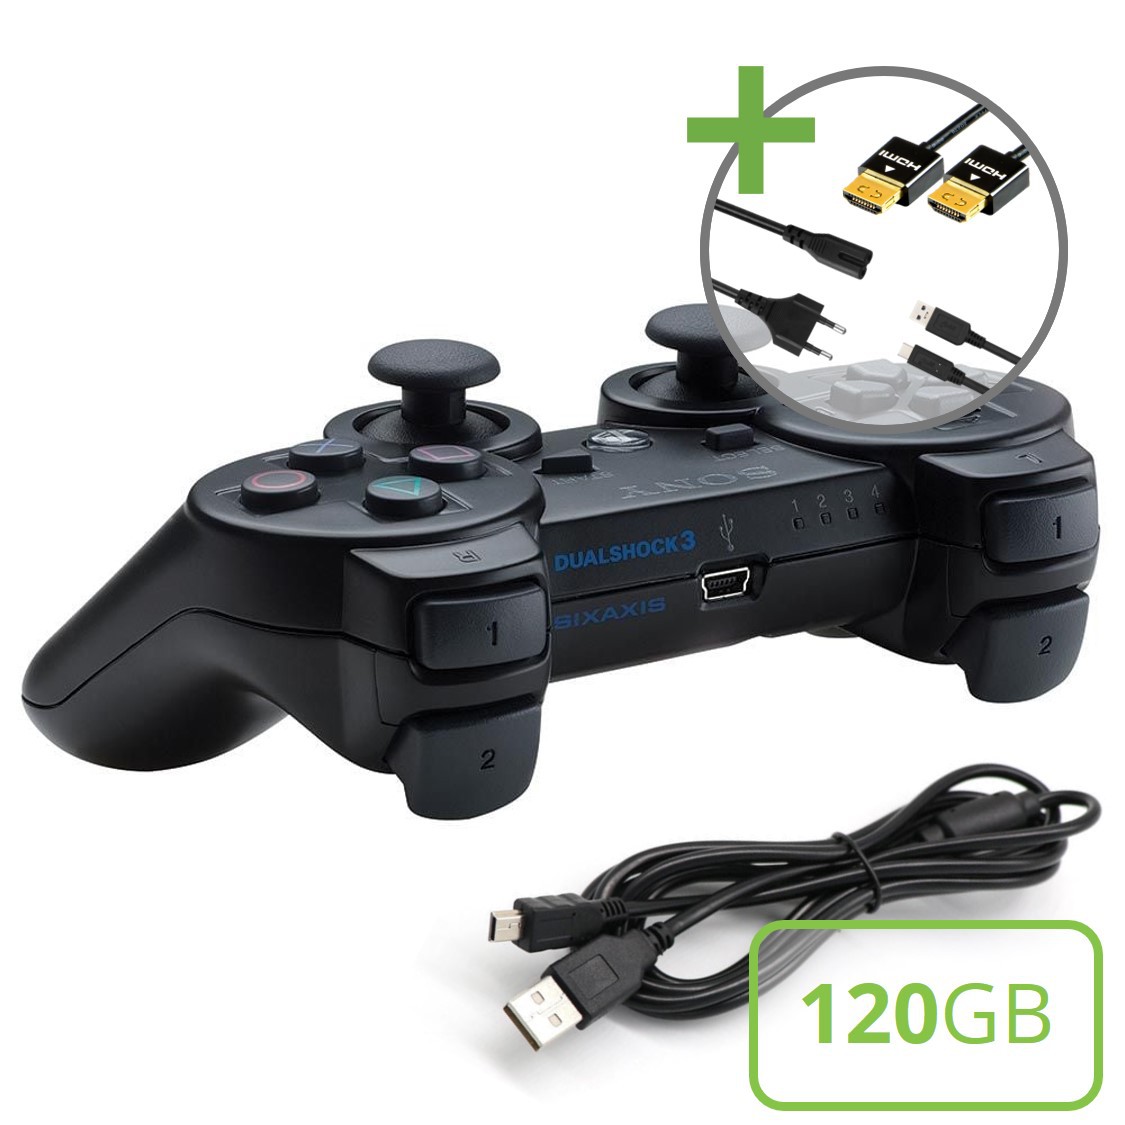 Sony PlayStation 3 Slim (120GB) Starter Pack - DualShock Edition - Playstation 3 Hardware - 4